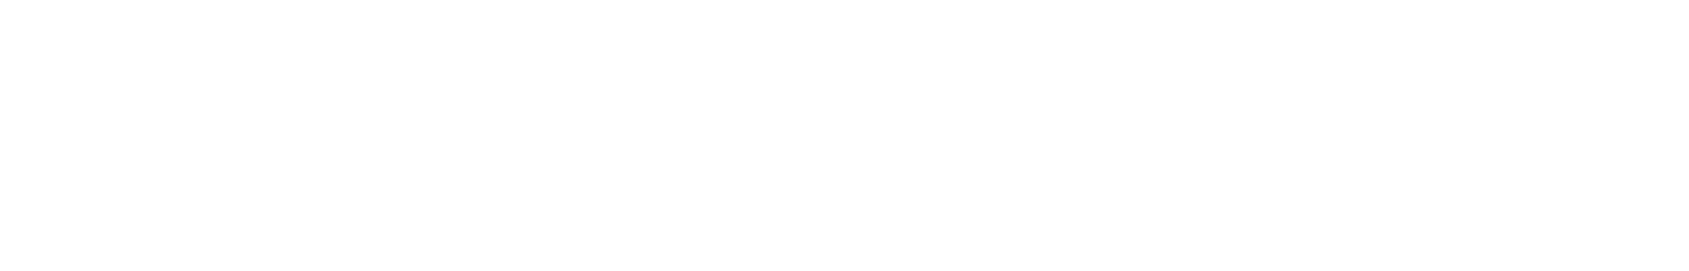 Red Mill logo long